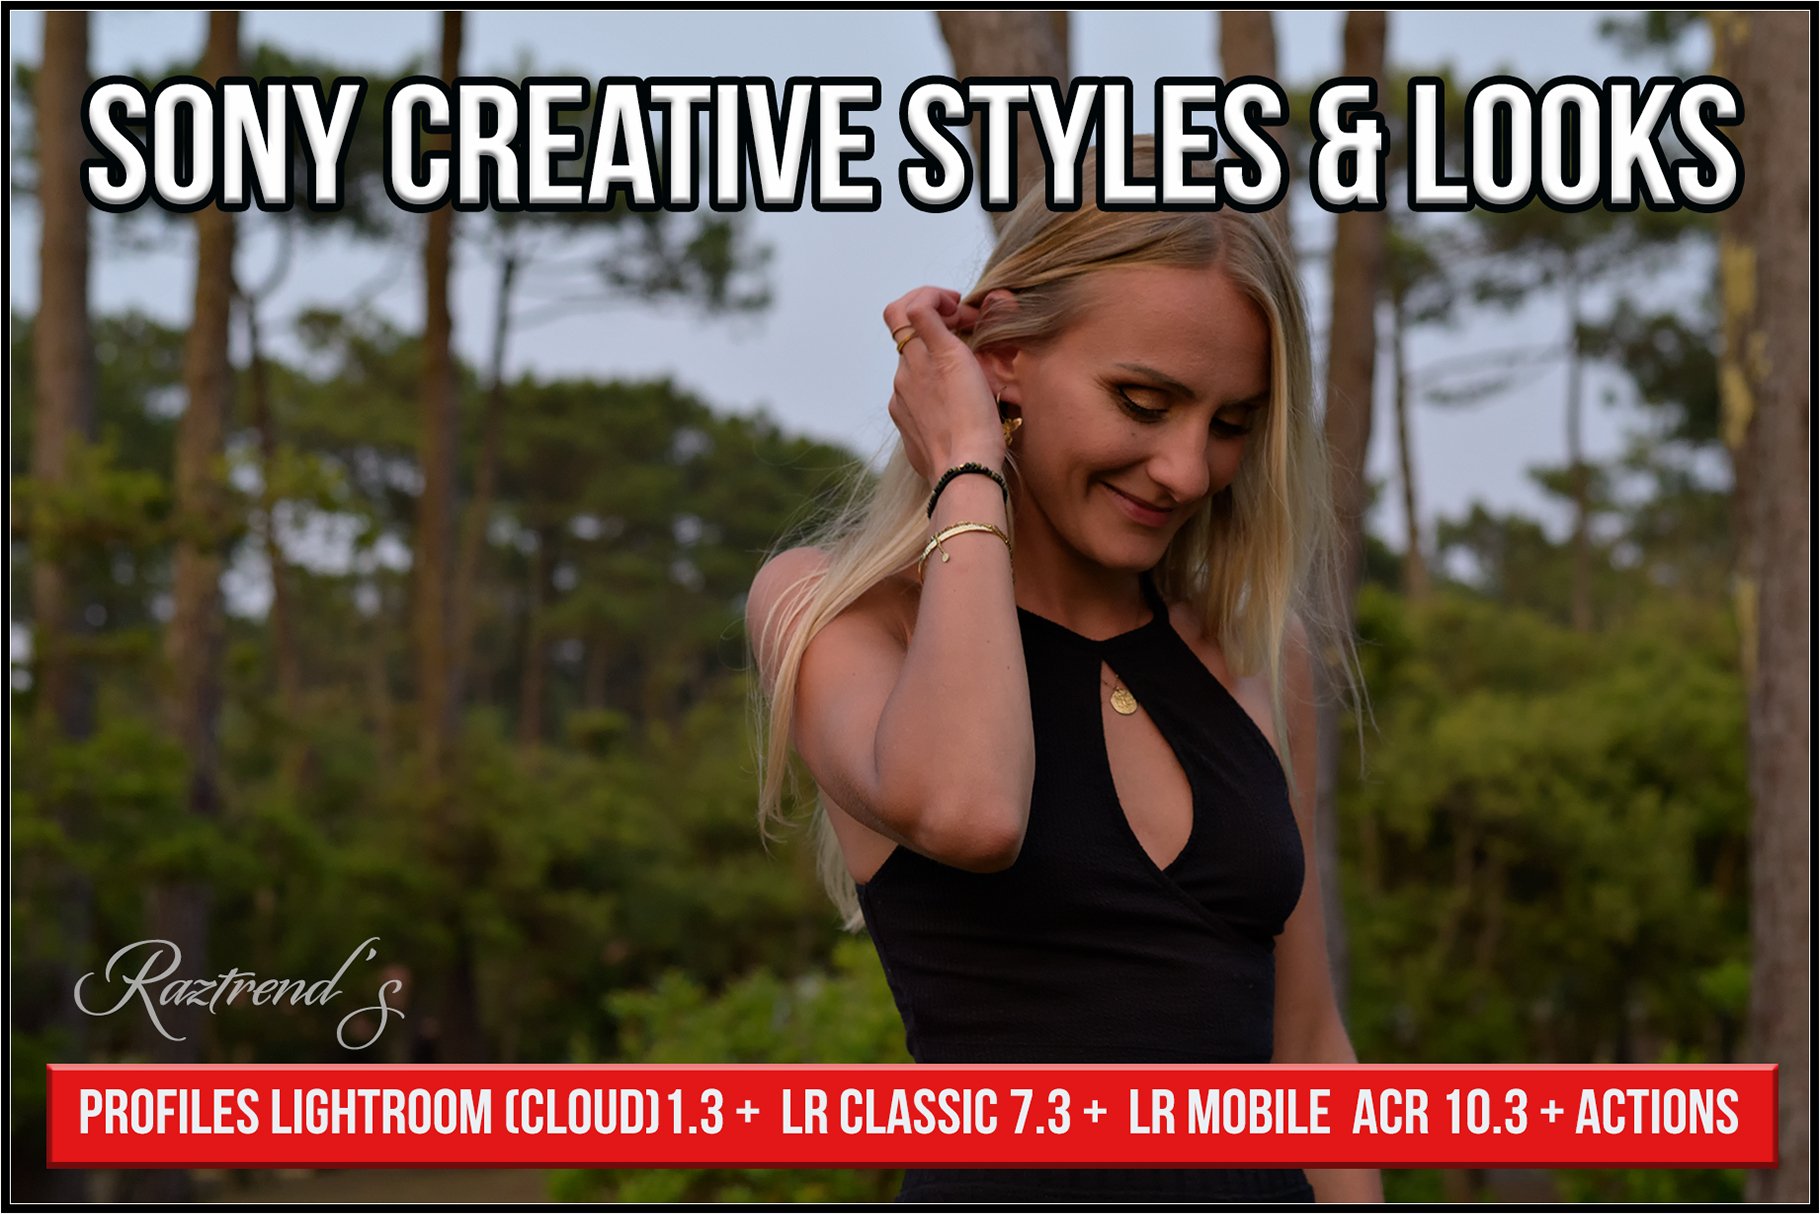 Sony Creative Styles & Lookscover image.